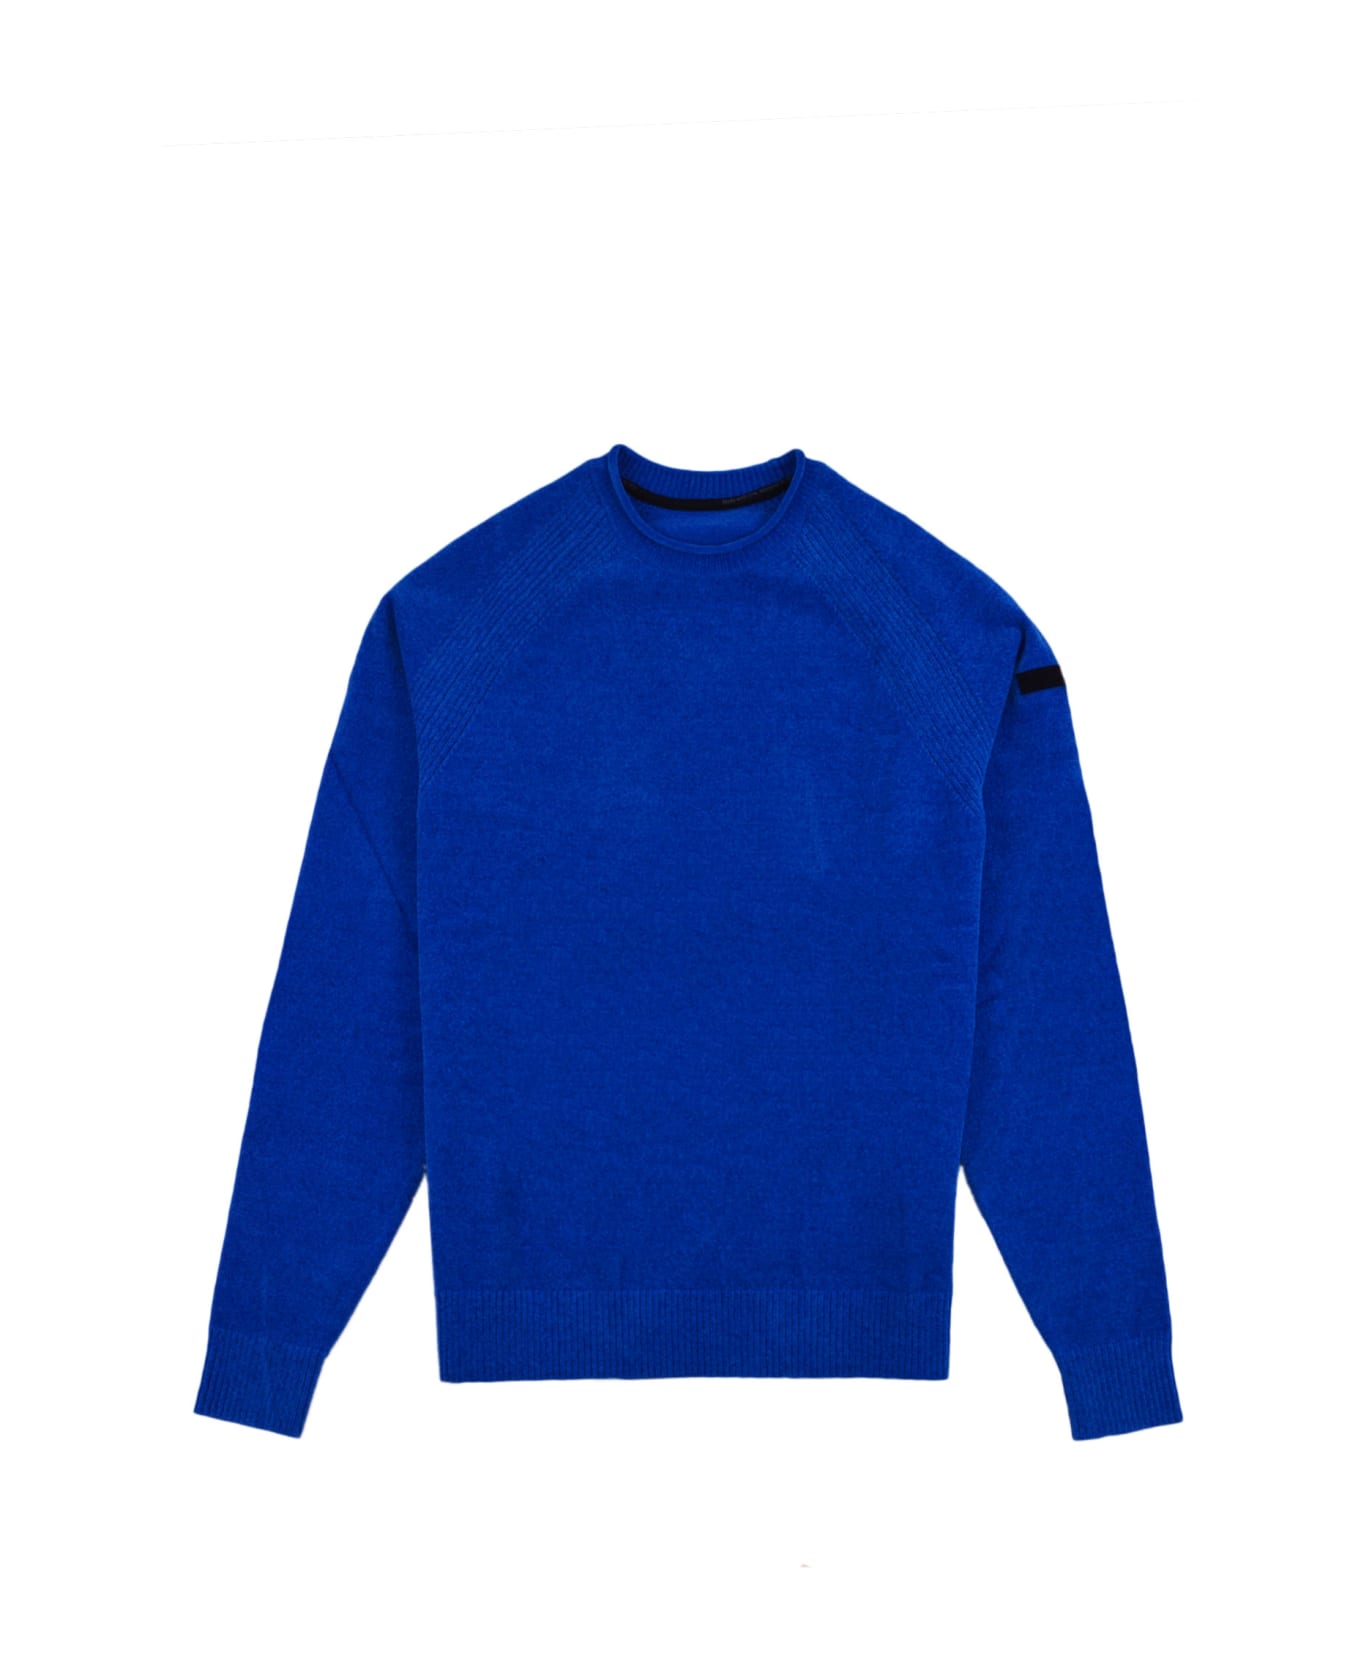 RRD - Roberto Ricci Design Sweater Sweater - BLU ROYAL